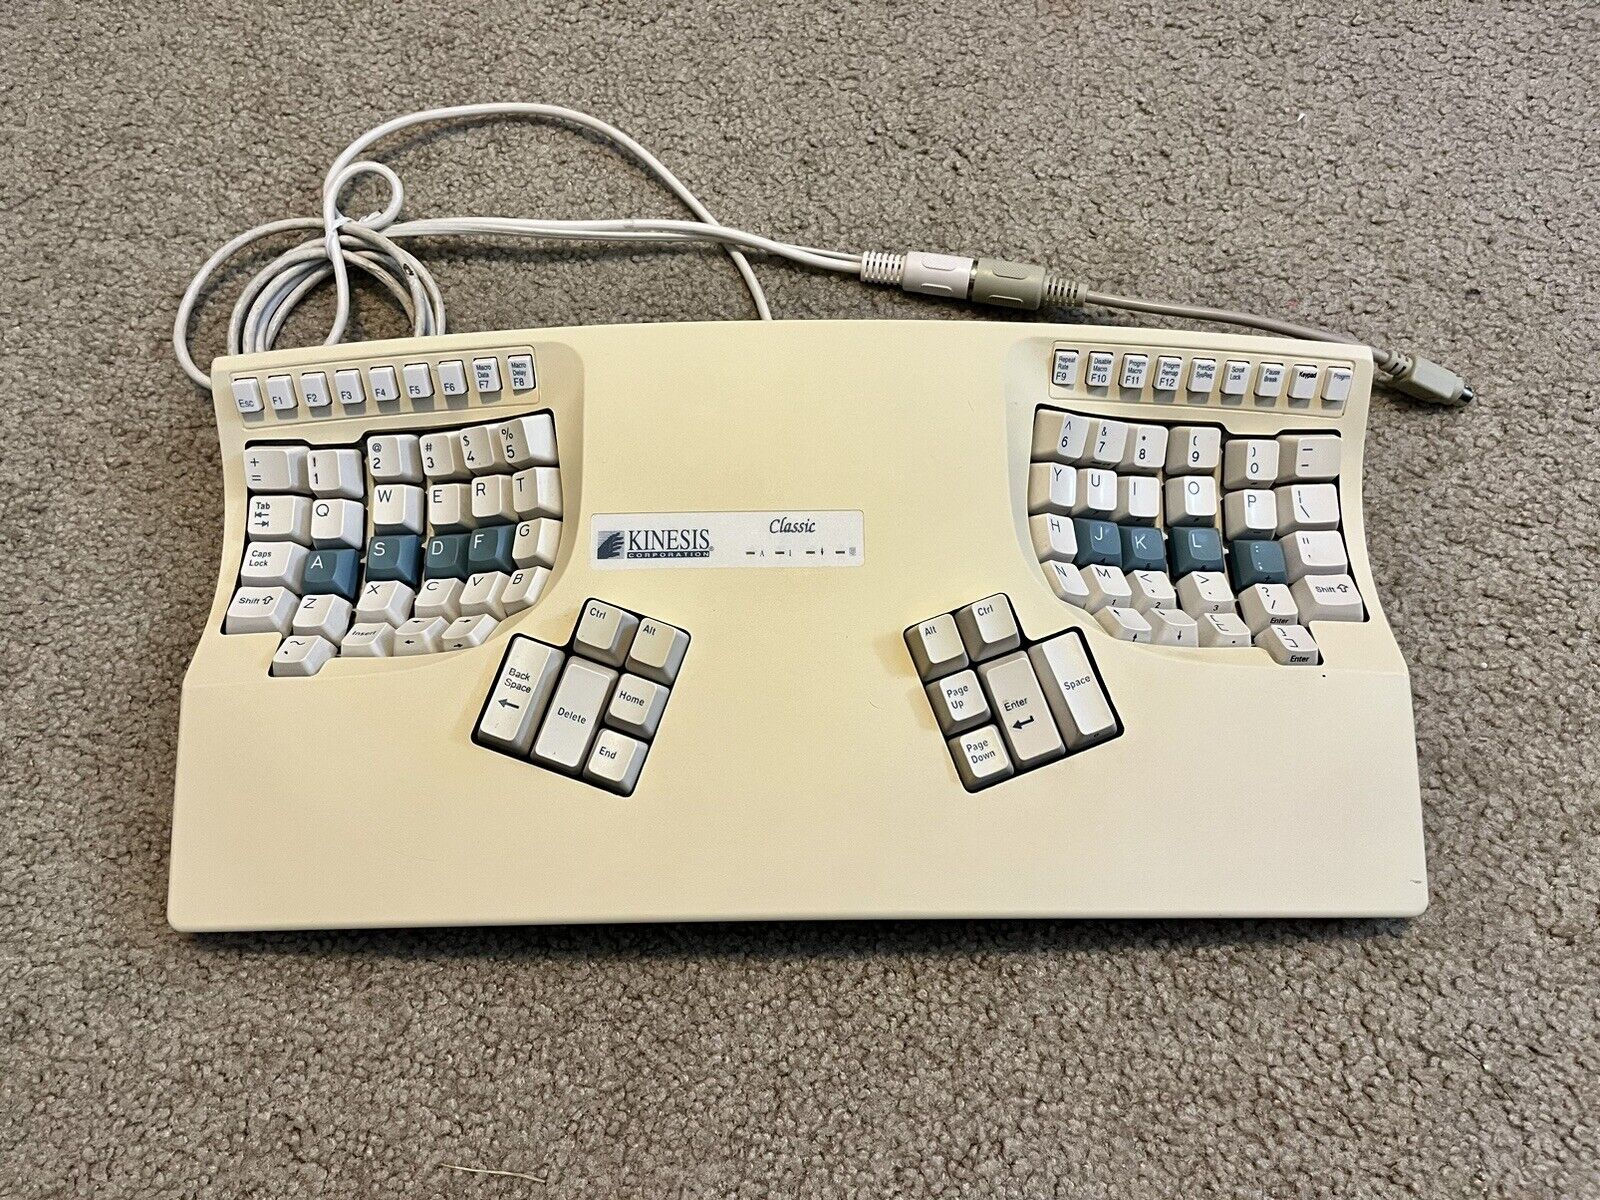 Kinesis Classic Keyboard Ergonomic KB133PC Tested 90’s